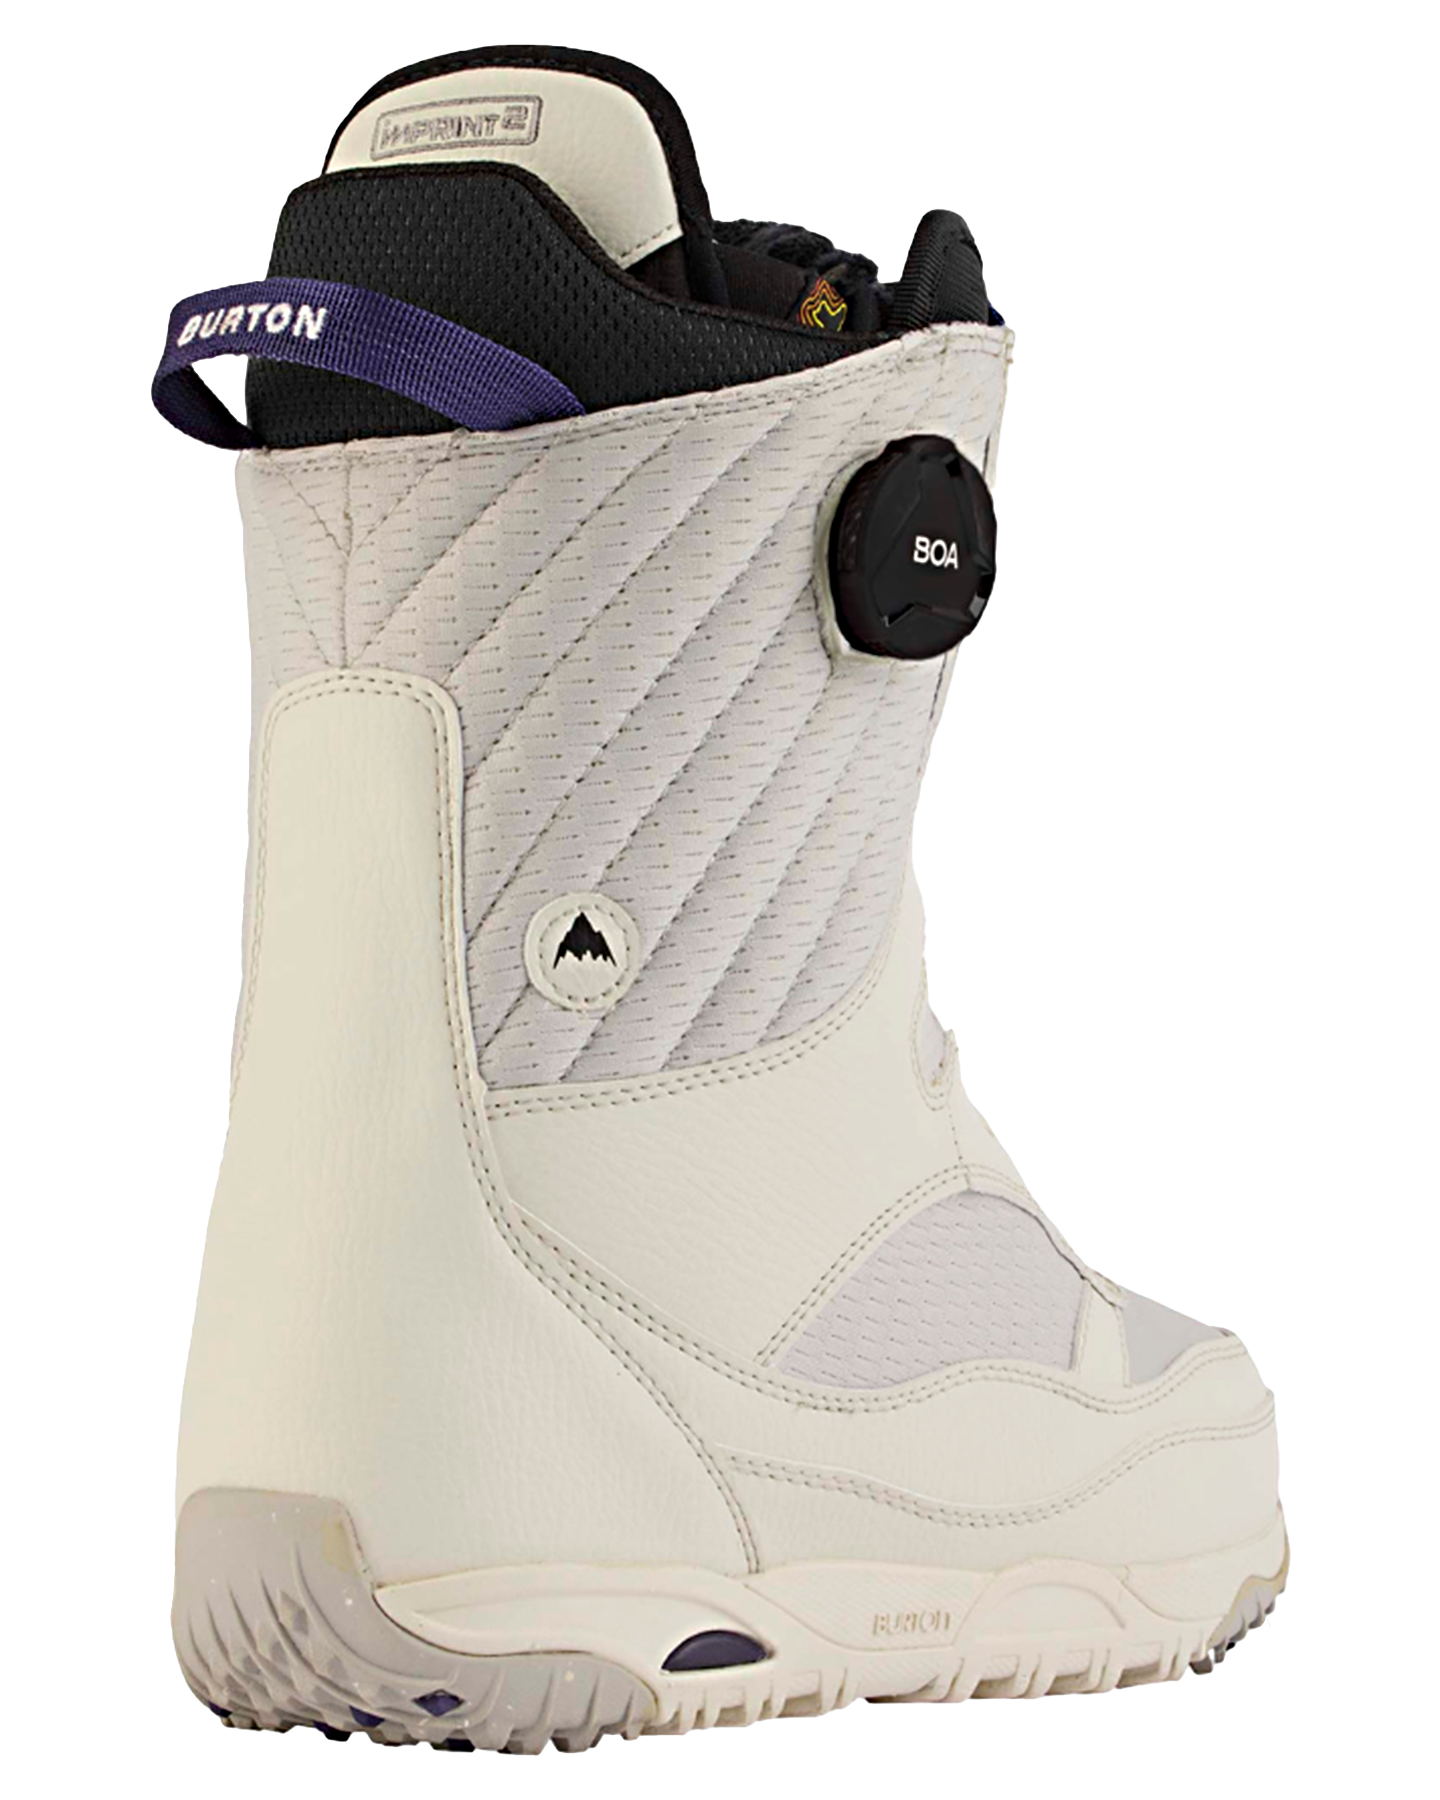 Burton Women's Limelight Boa® Snowboard Boots - Stout White Women's Snowboard Boots - Trojan Wake Ski Snow